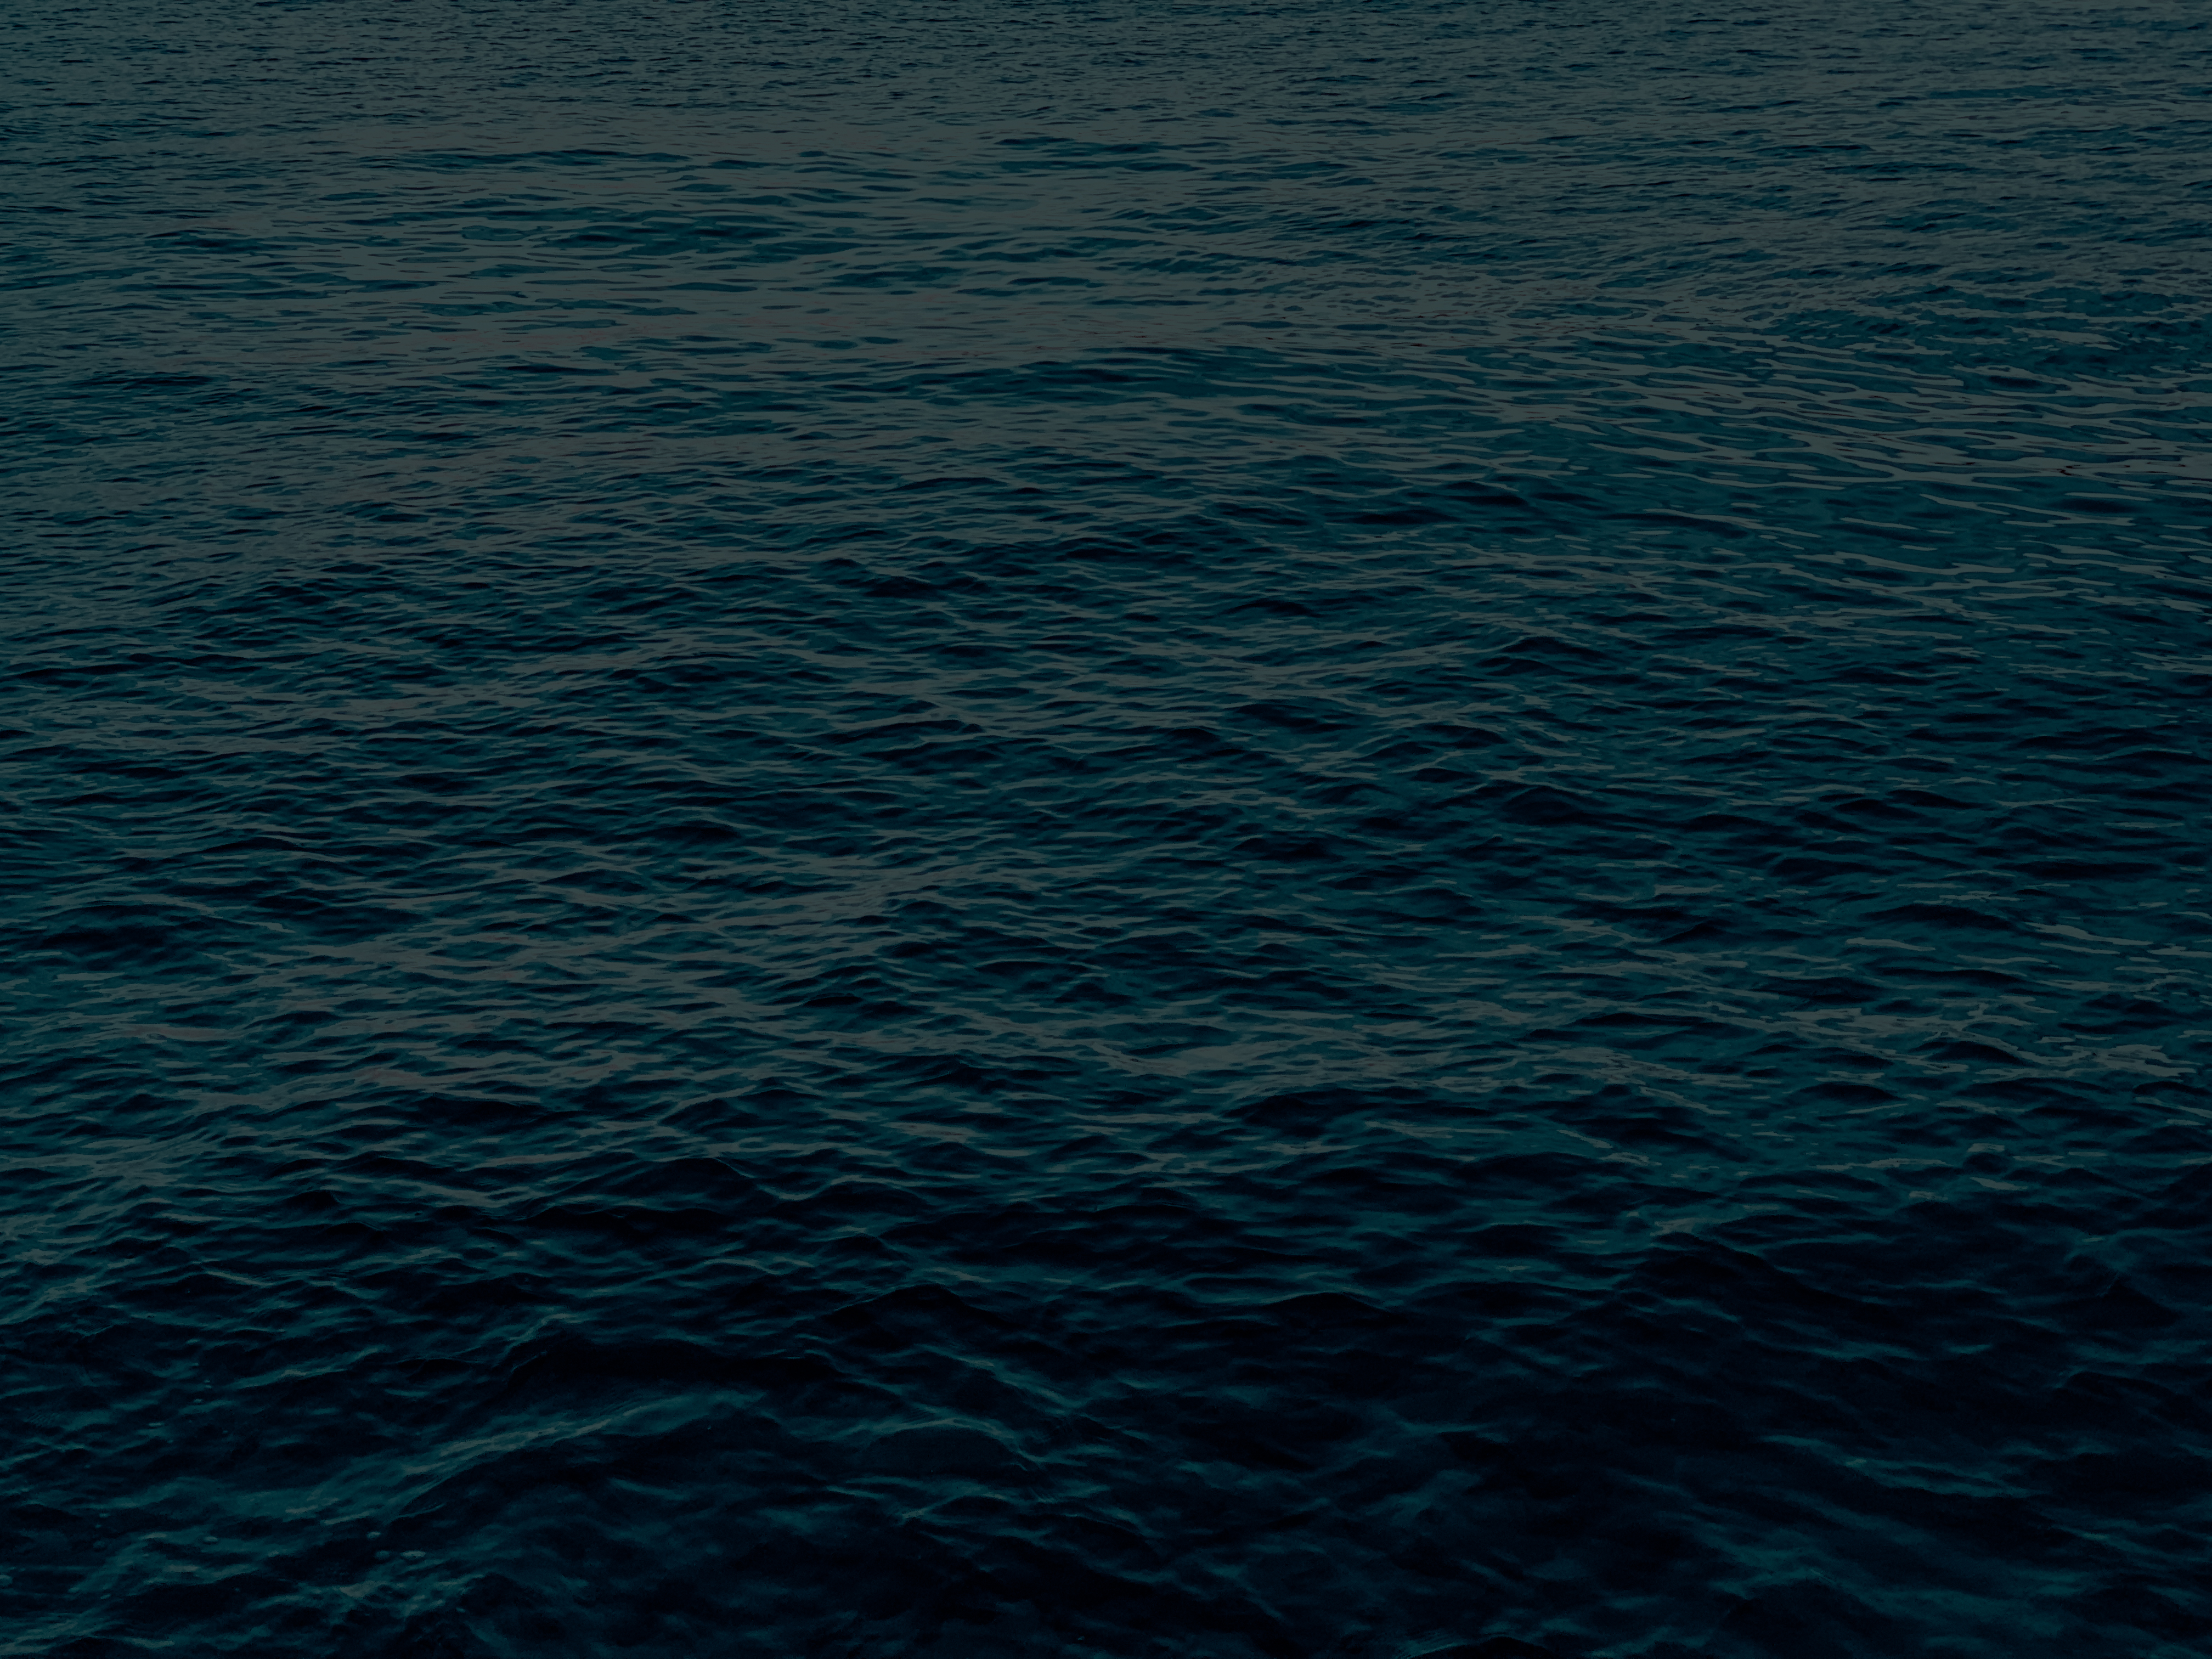 Calm Dark Blue Sea Background Free Stock Photo  picjumbo